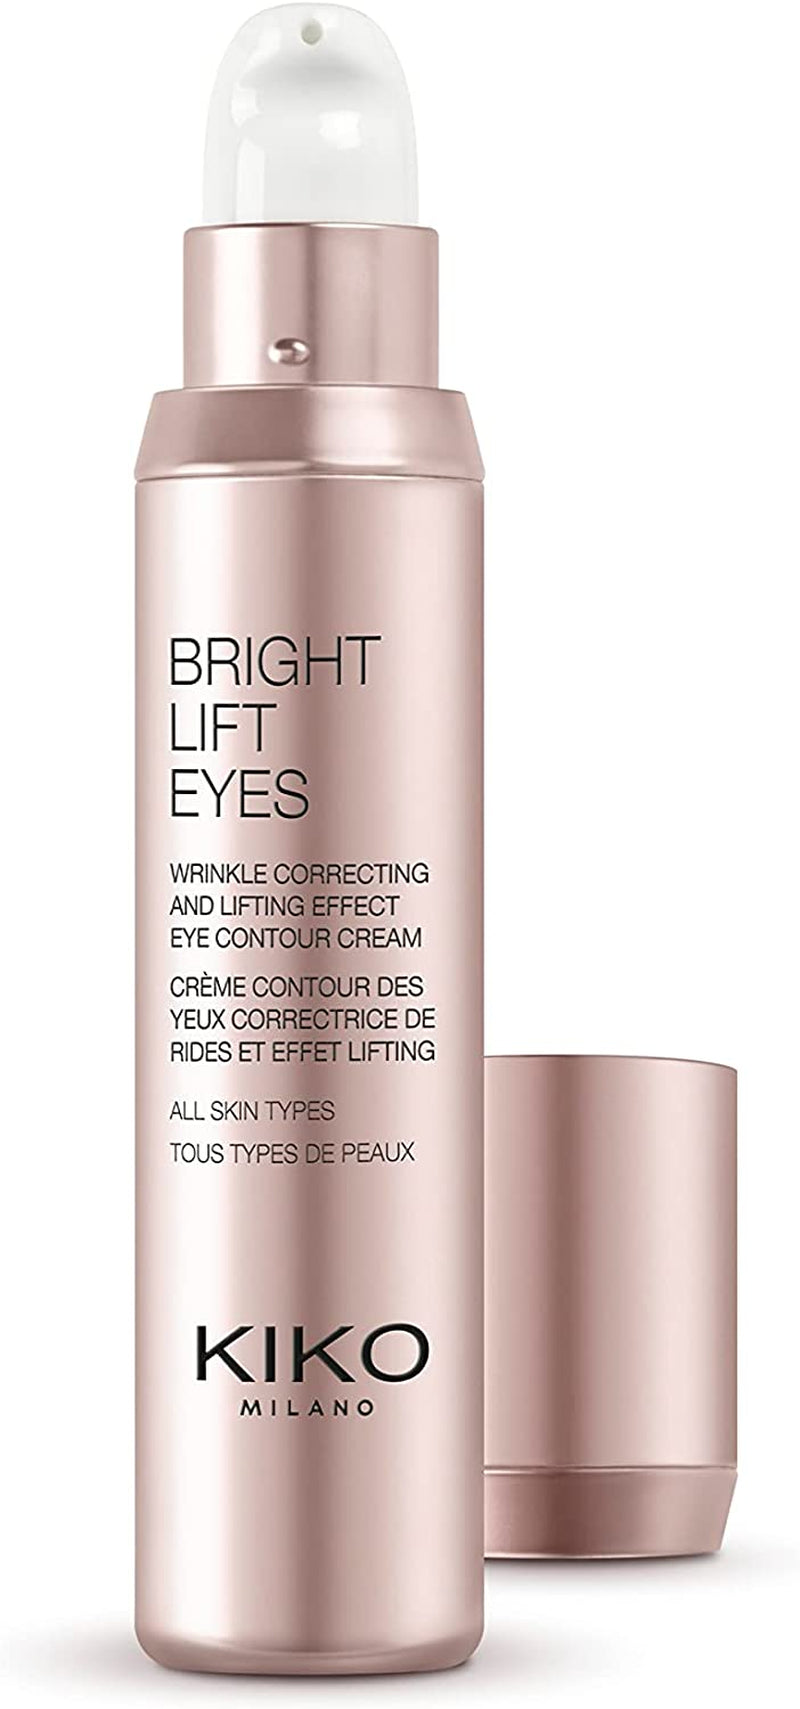 KIKO Milano Bright Lift Eyes | Lifting Eye Cream with Marine Collagen